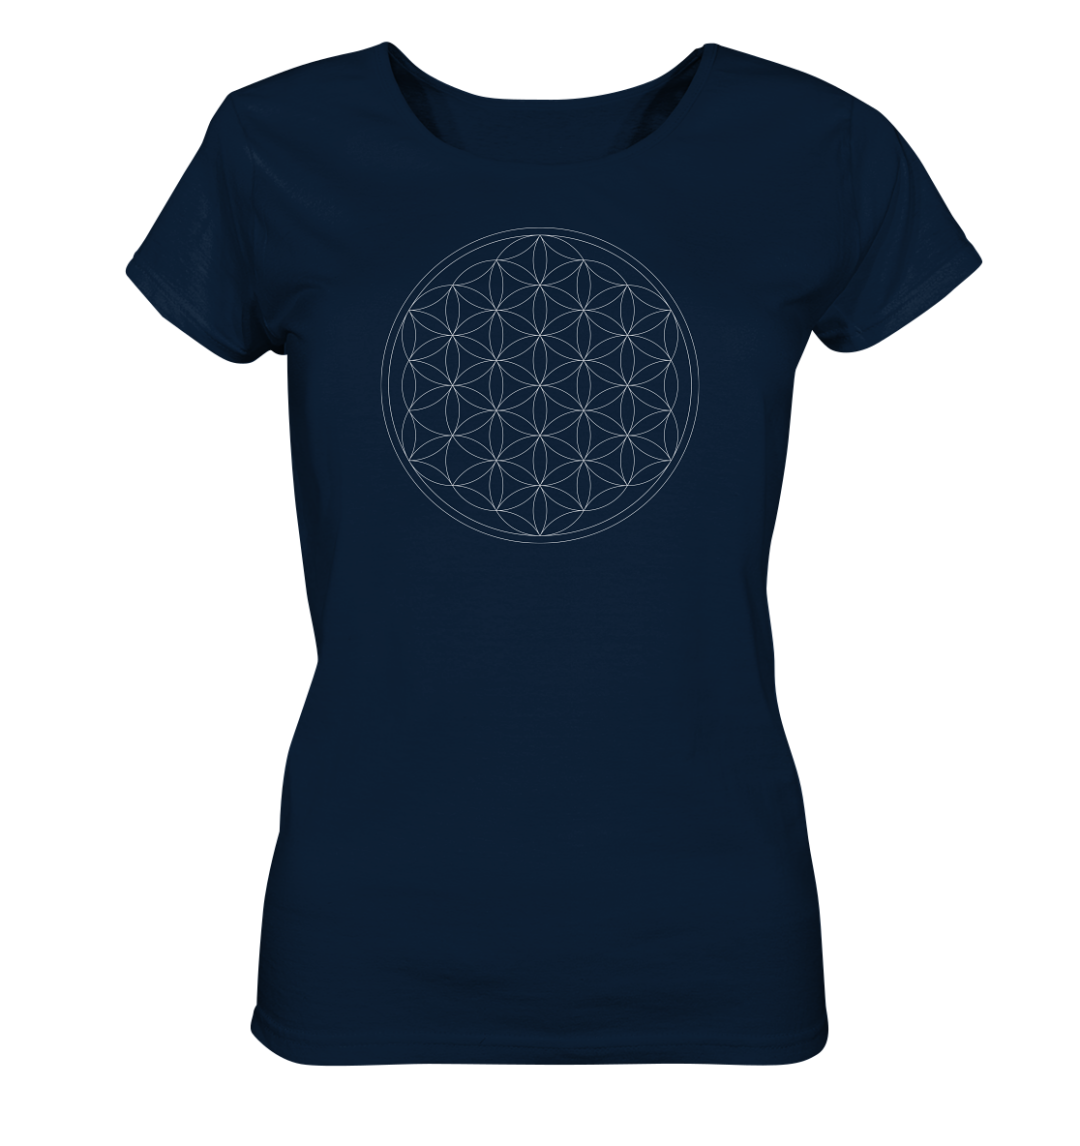 Lebensblume - Damen T-Shirt in navy blau - bio baumwolle